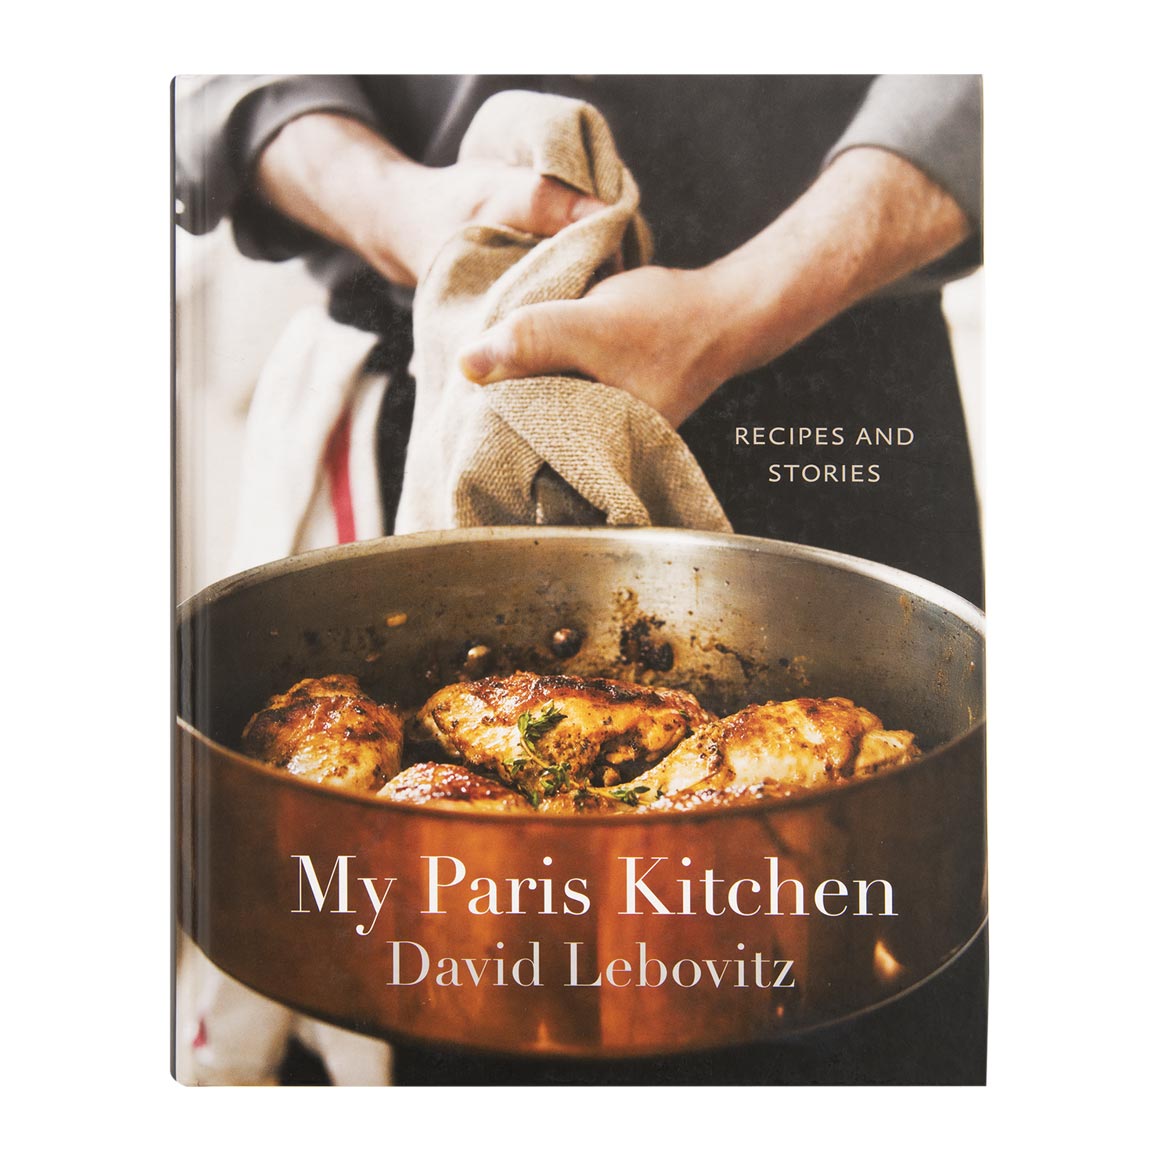 My Paris Kitchen Recipes And Stories By David Lebovitz 9781607742678 ?V=HB1P&o=eyJidWNrZXQiOiJ3dy1vbmxpbmUtaW1hZ2UtcmVzaXplIiwia2V5IjoiaW1hZ2VzL2VsYXN0aWNlcmEvcHJvZHVjdHMvaGVyby8yMDE5LTEyLTE3Lzk3ODE2MDc3NDI2NzhfaGVyby5qcGcifQ&